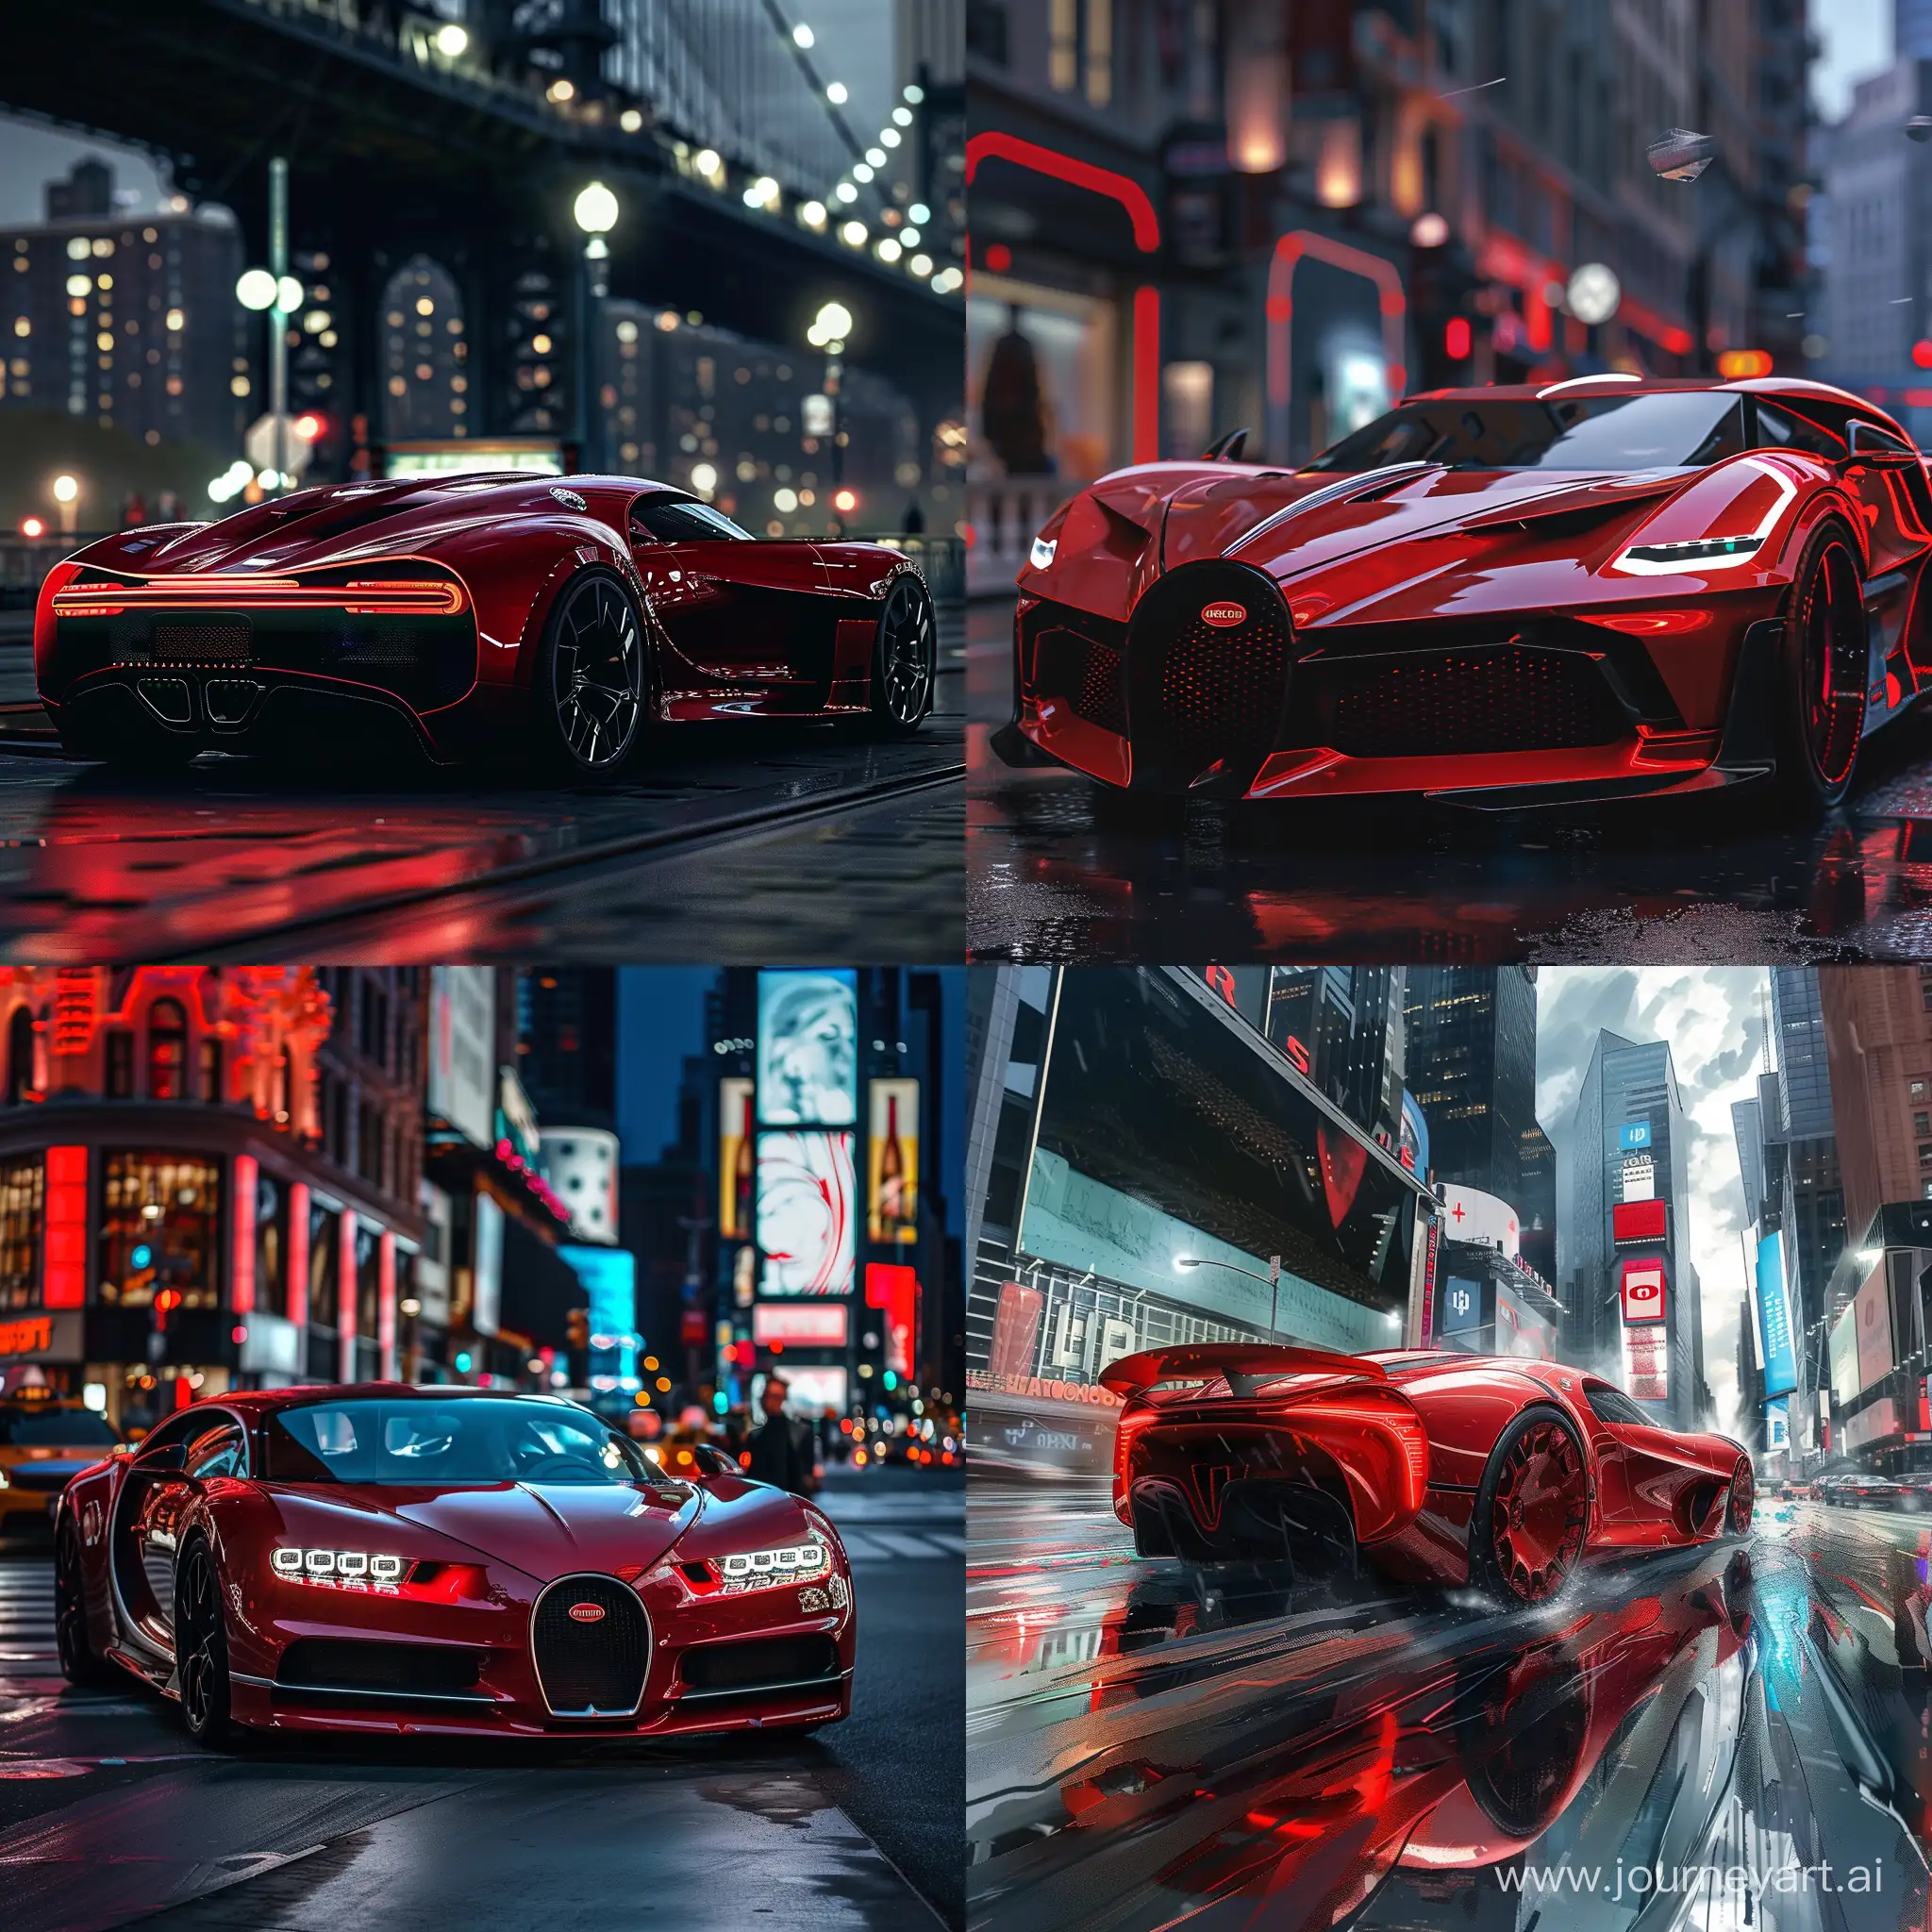 Sleek-Red-Bugatti-Car-Roaming-New-York-City-Streets